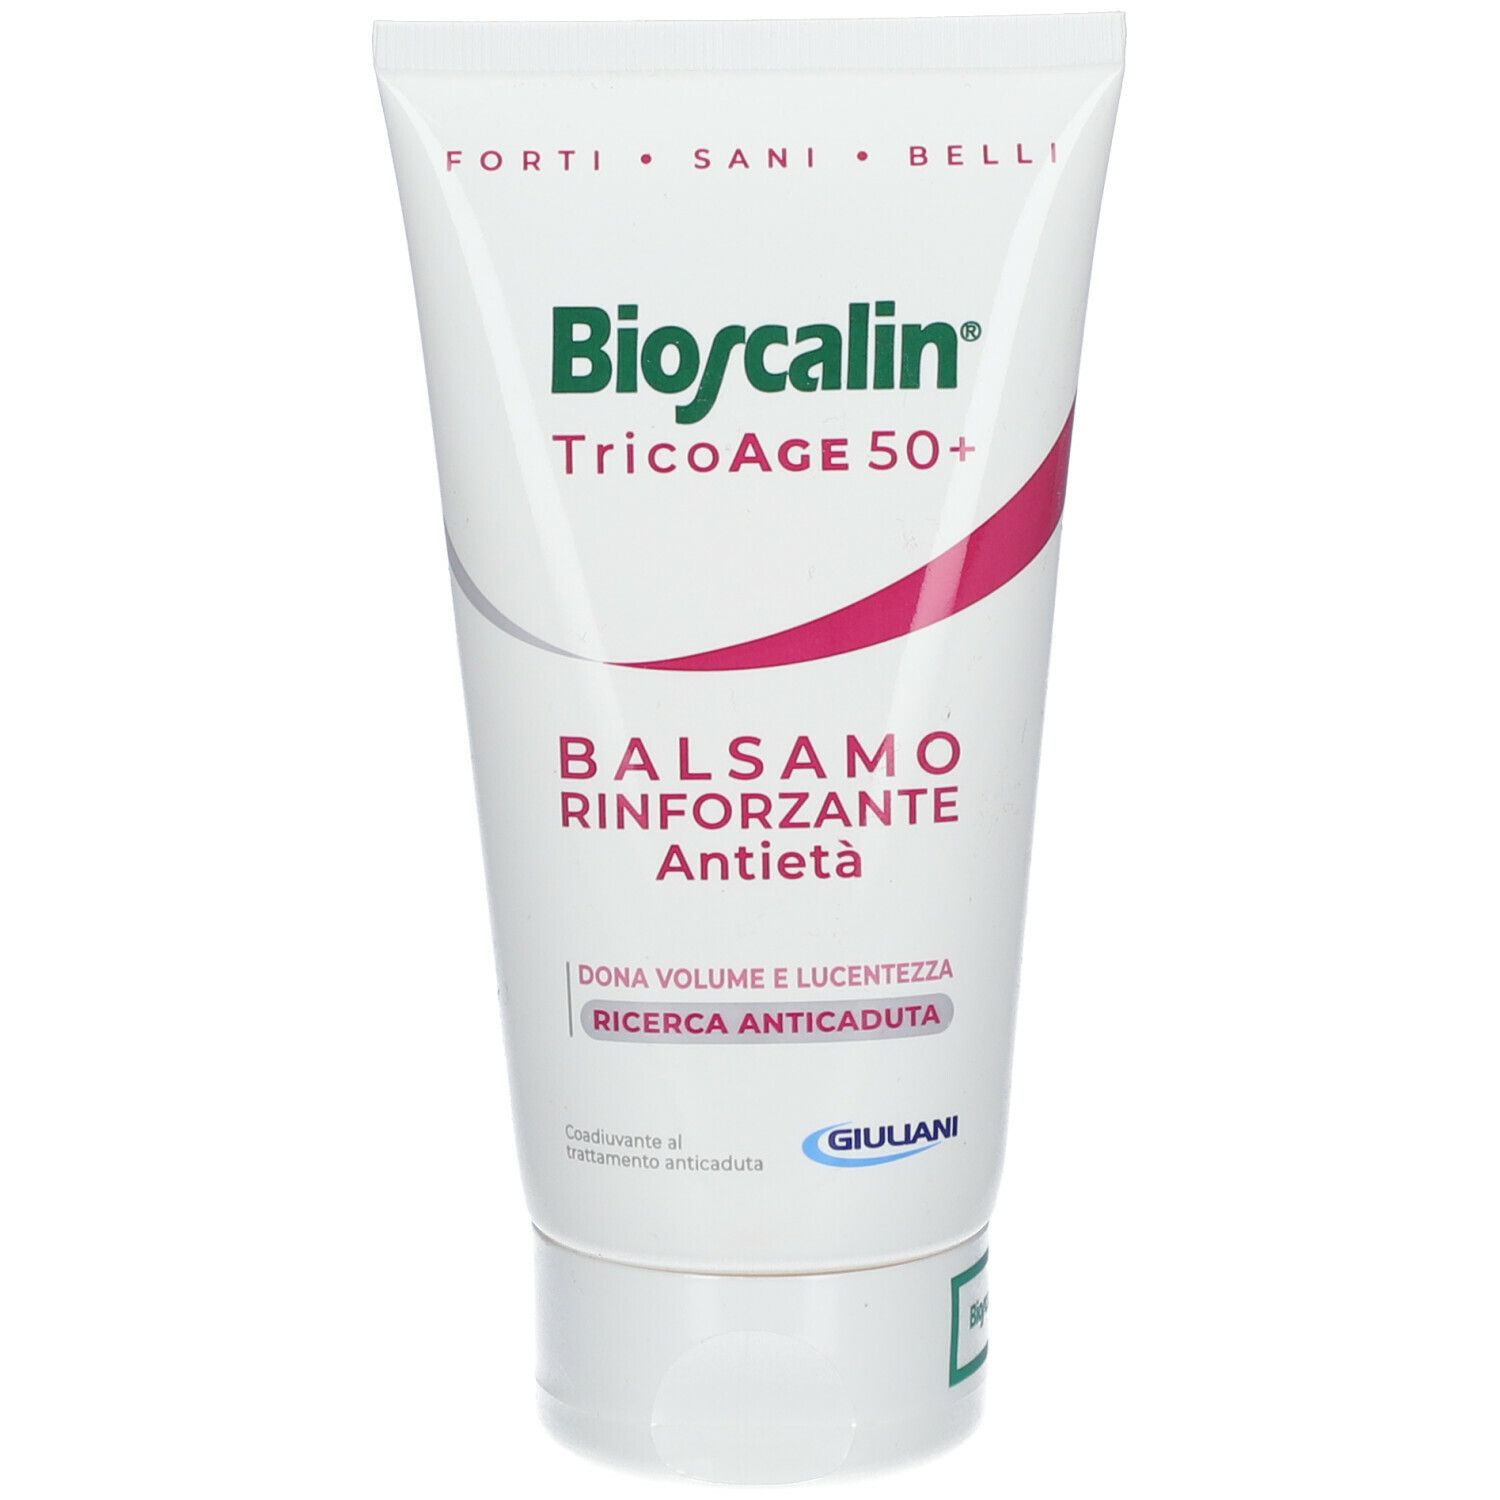 Bioscalin® TricoAGE 45+ Balsamo Rinforzante Antietà